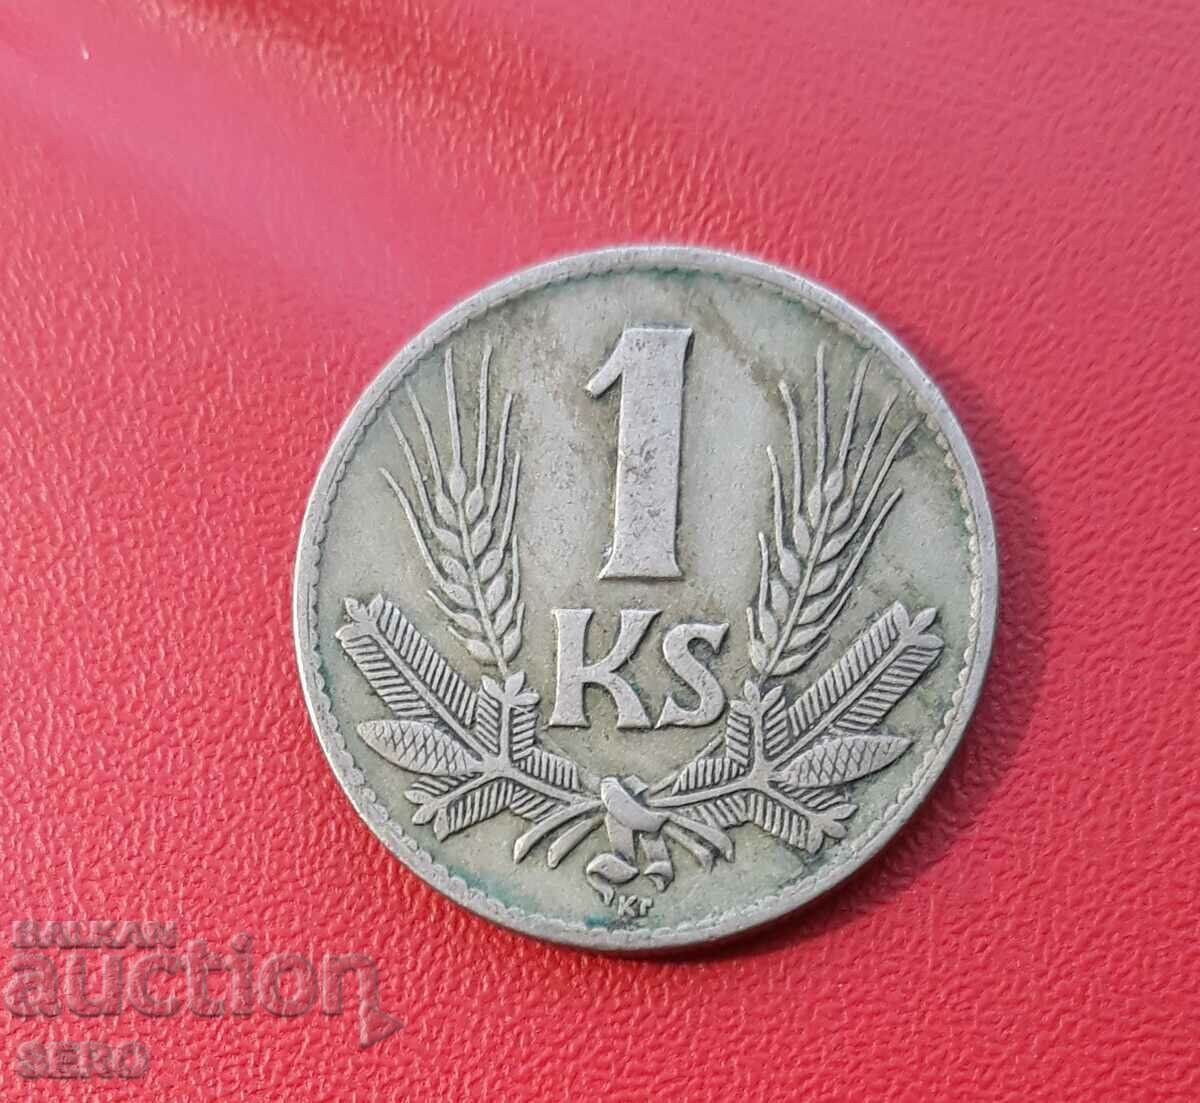 Slovakia-1 crown 1940